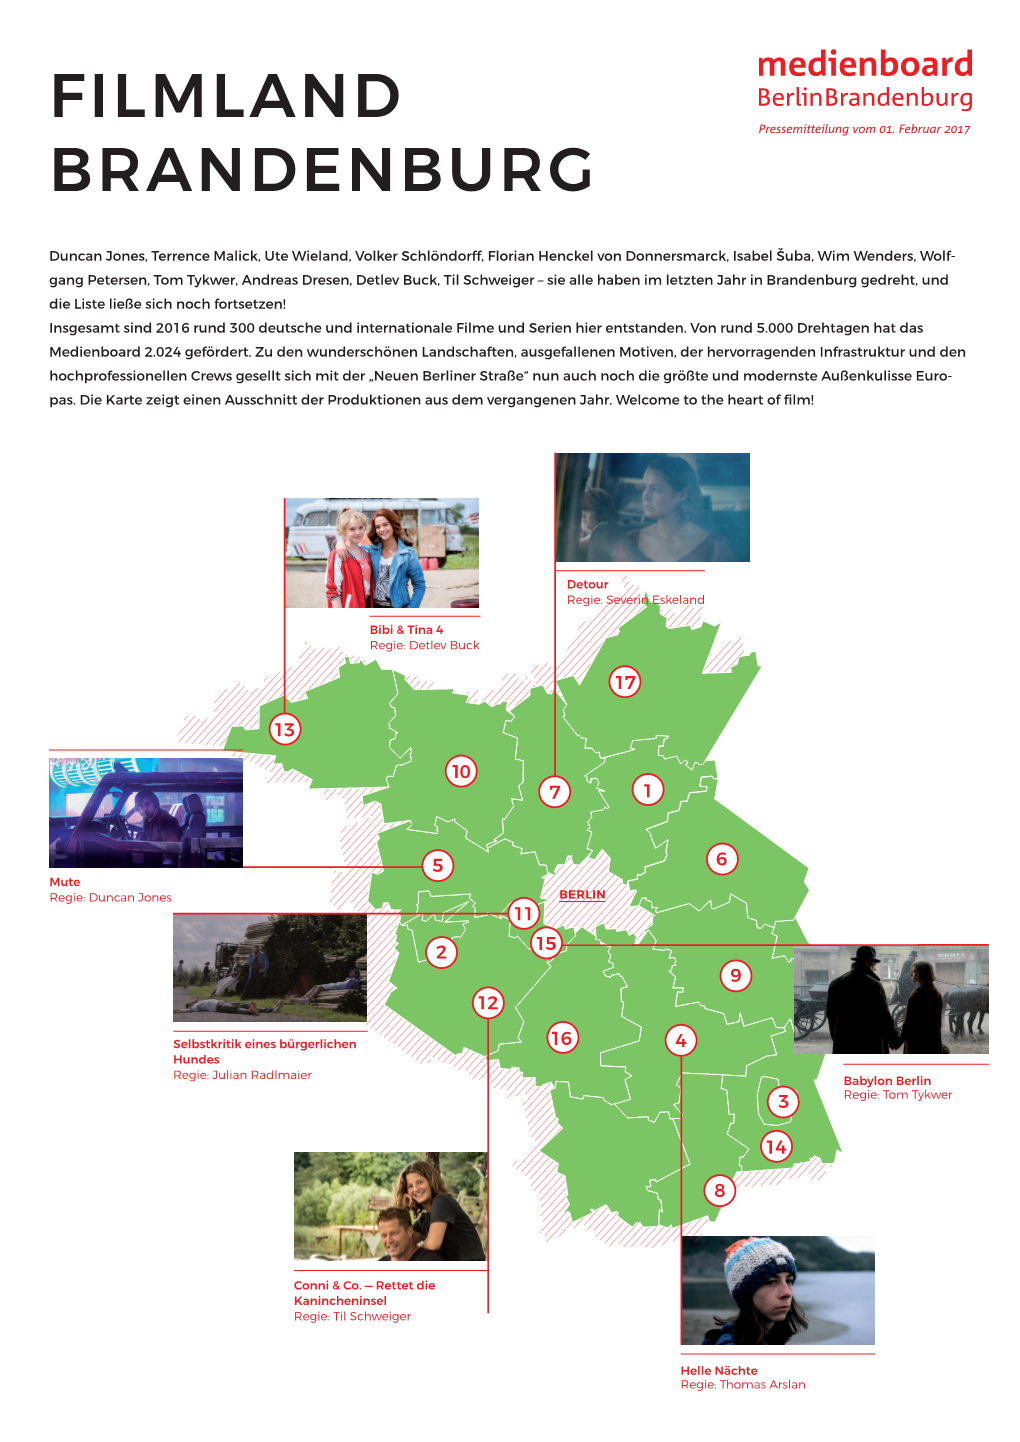 Filmlandkarte Brandenburg 2016